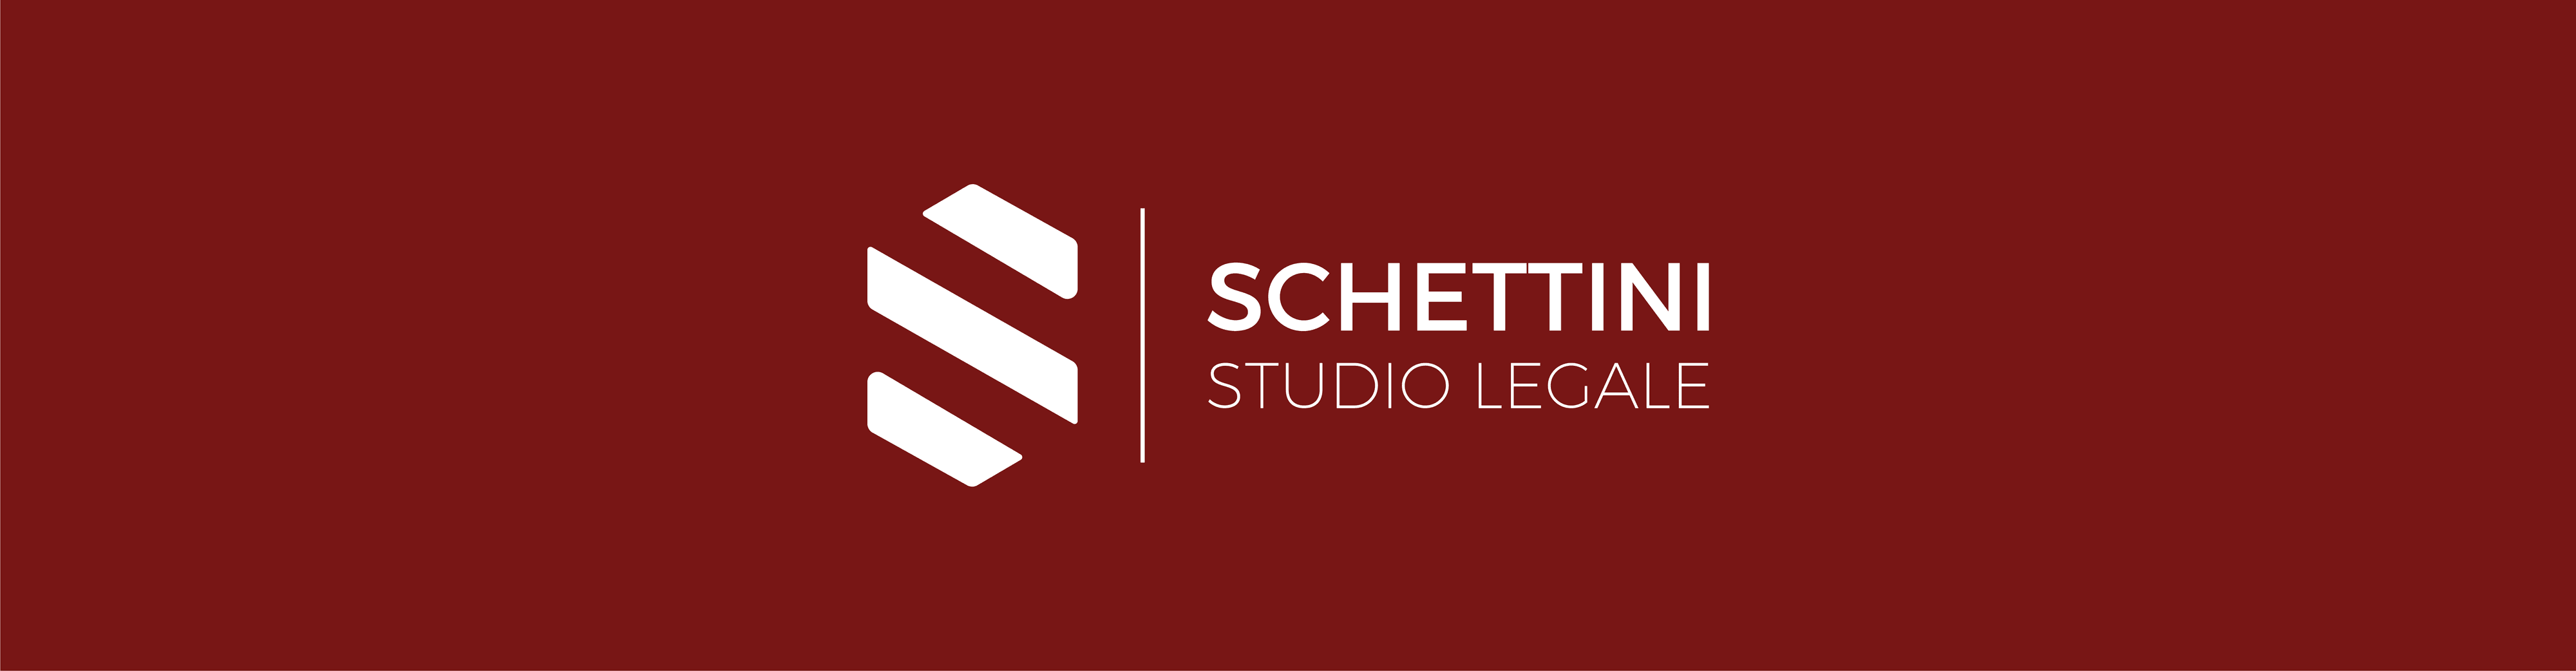 StudioLegaleSchettini bannière